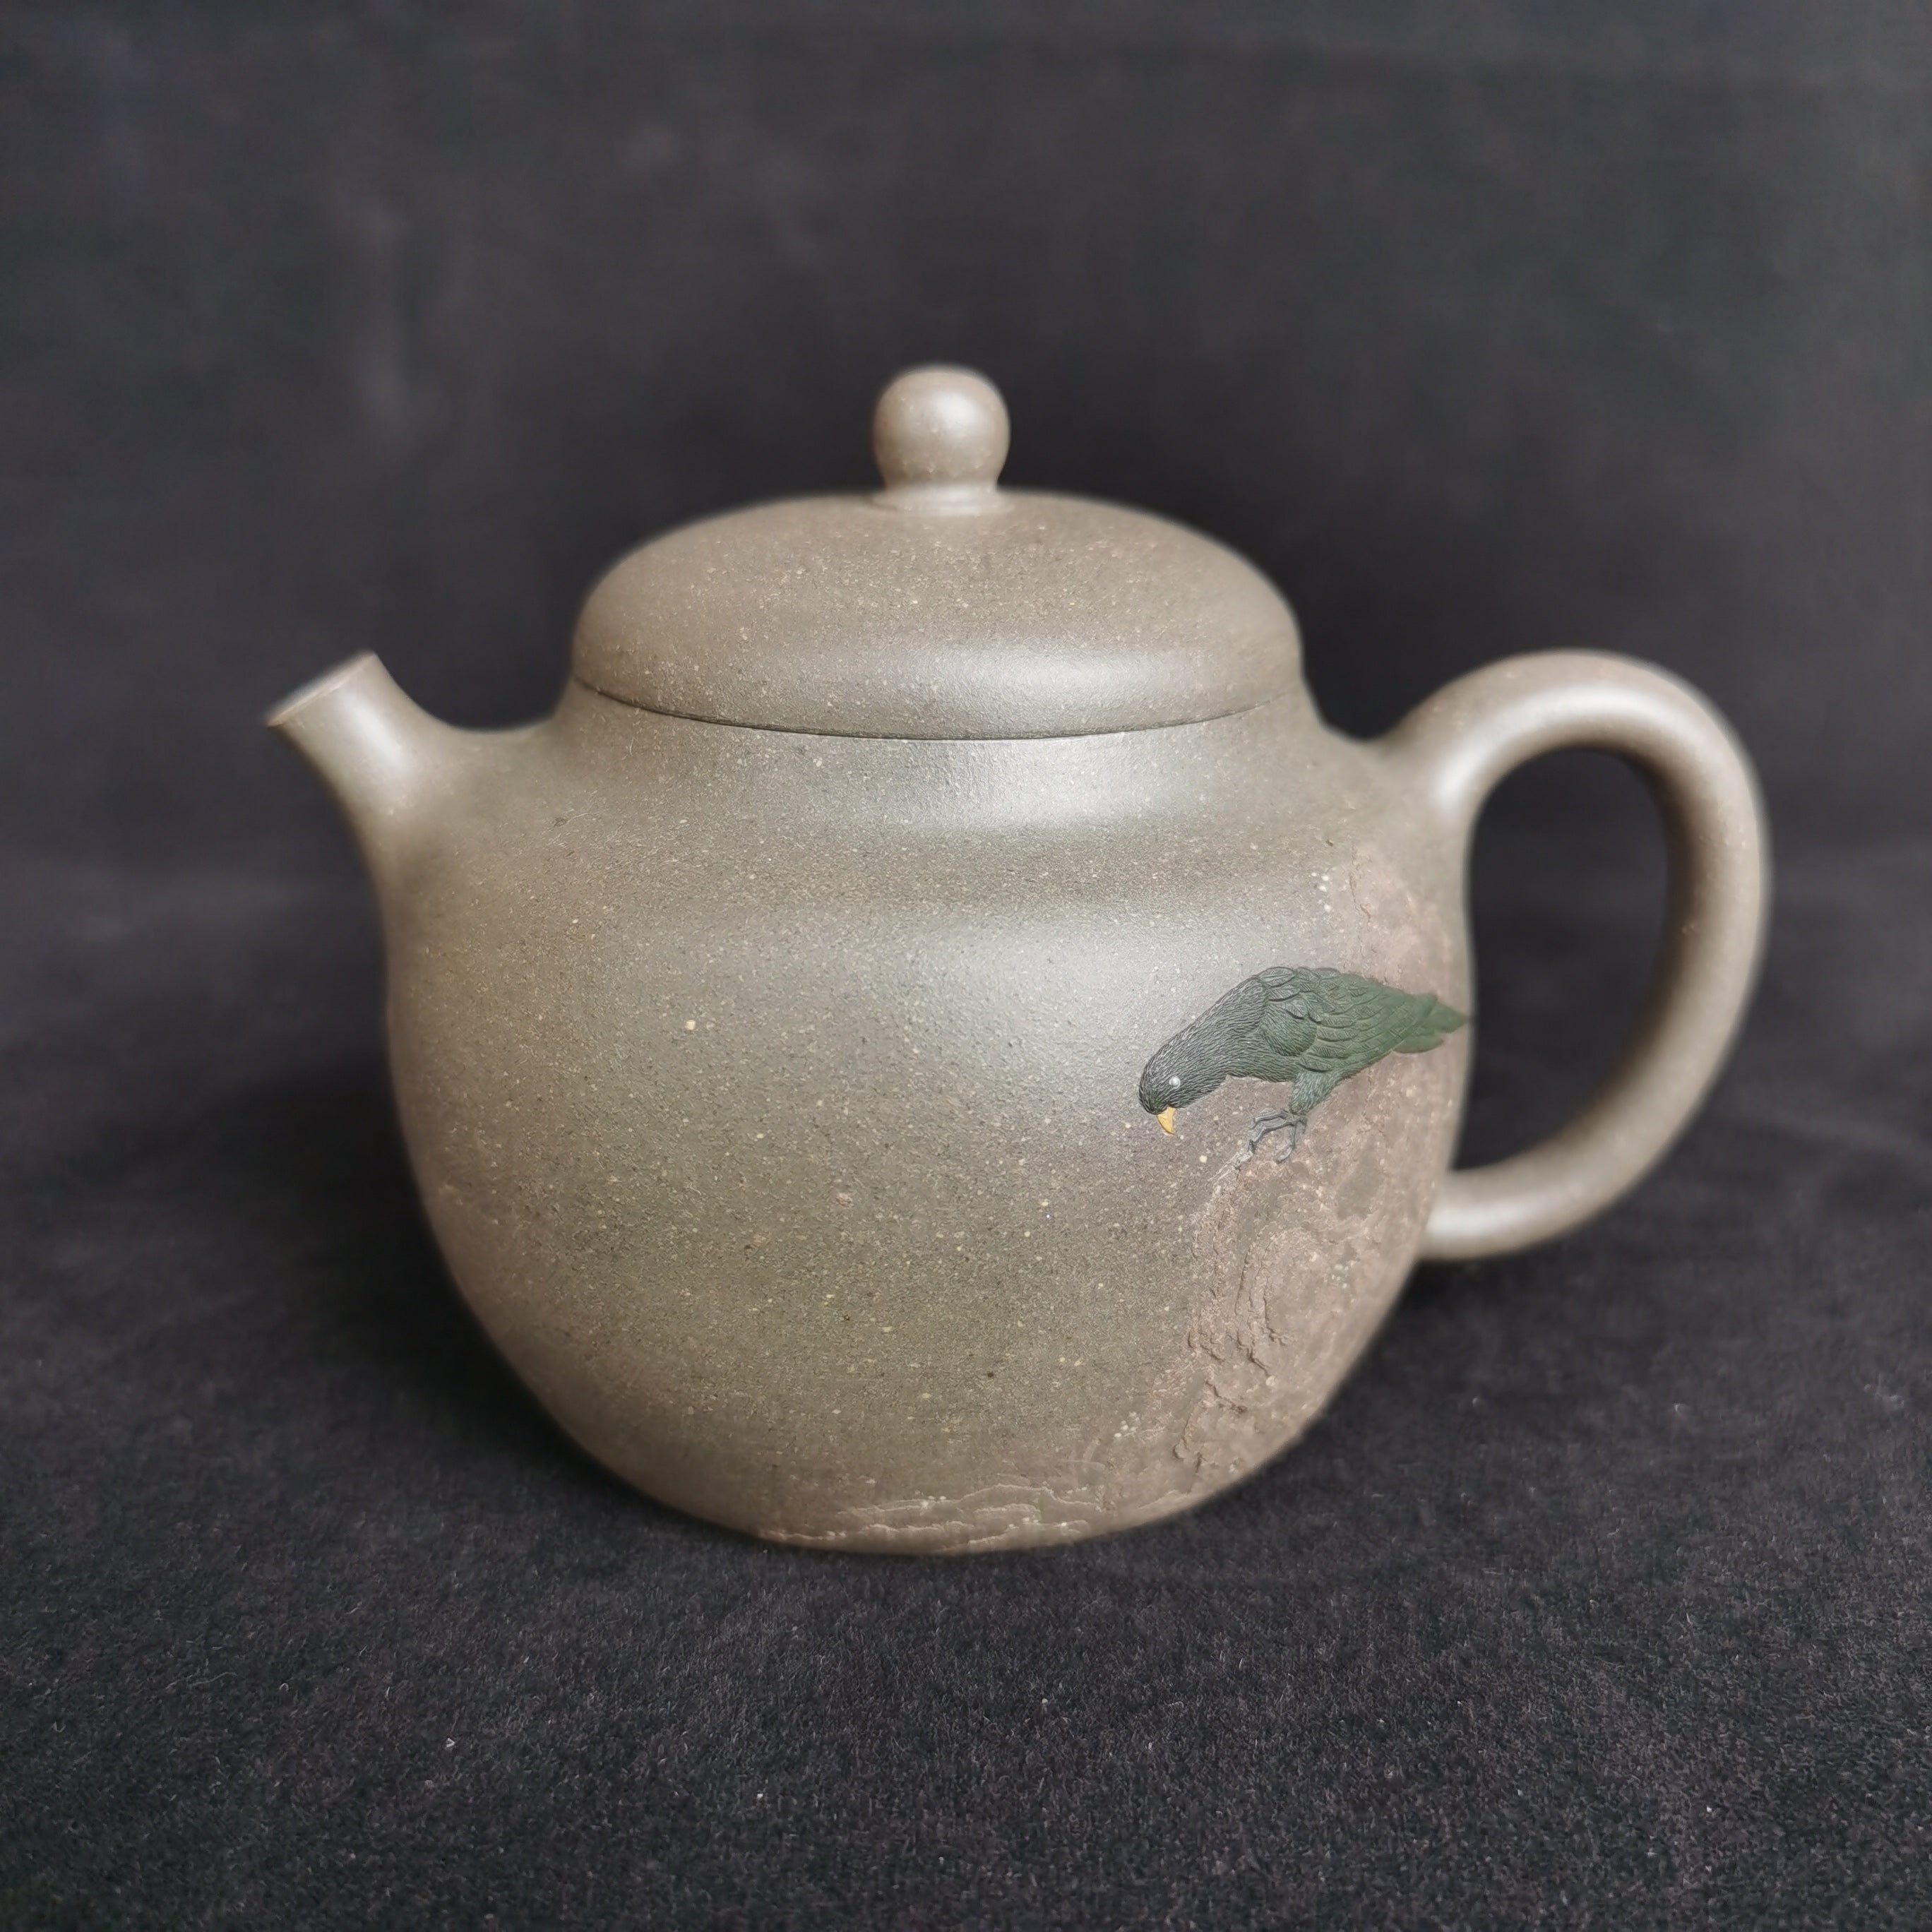 Siyutao artwork Green parrot teapot 160ml